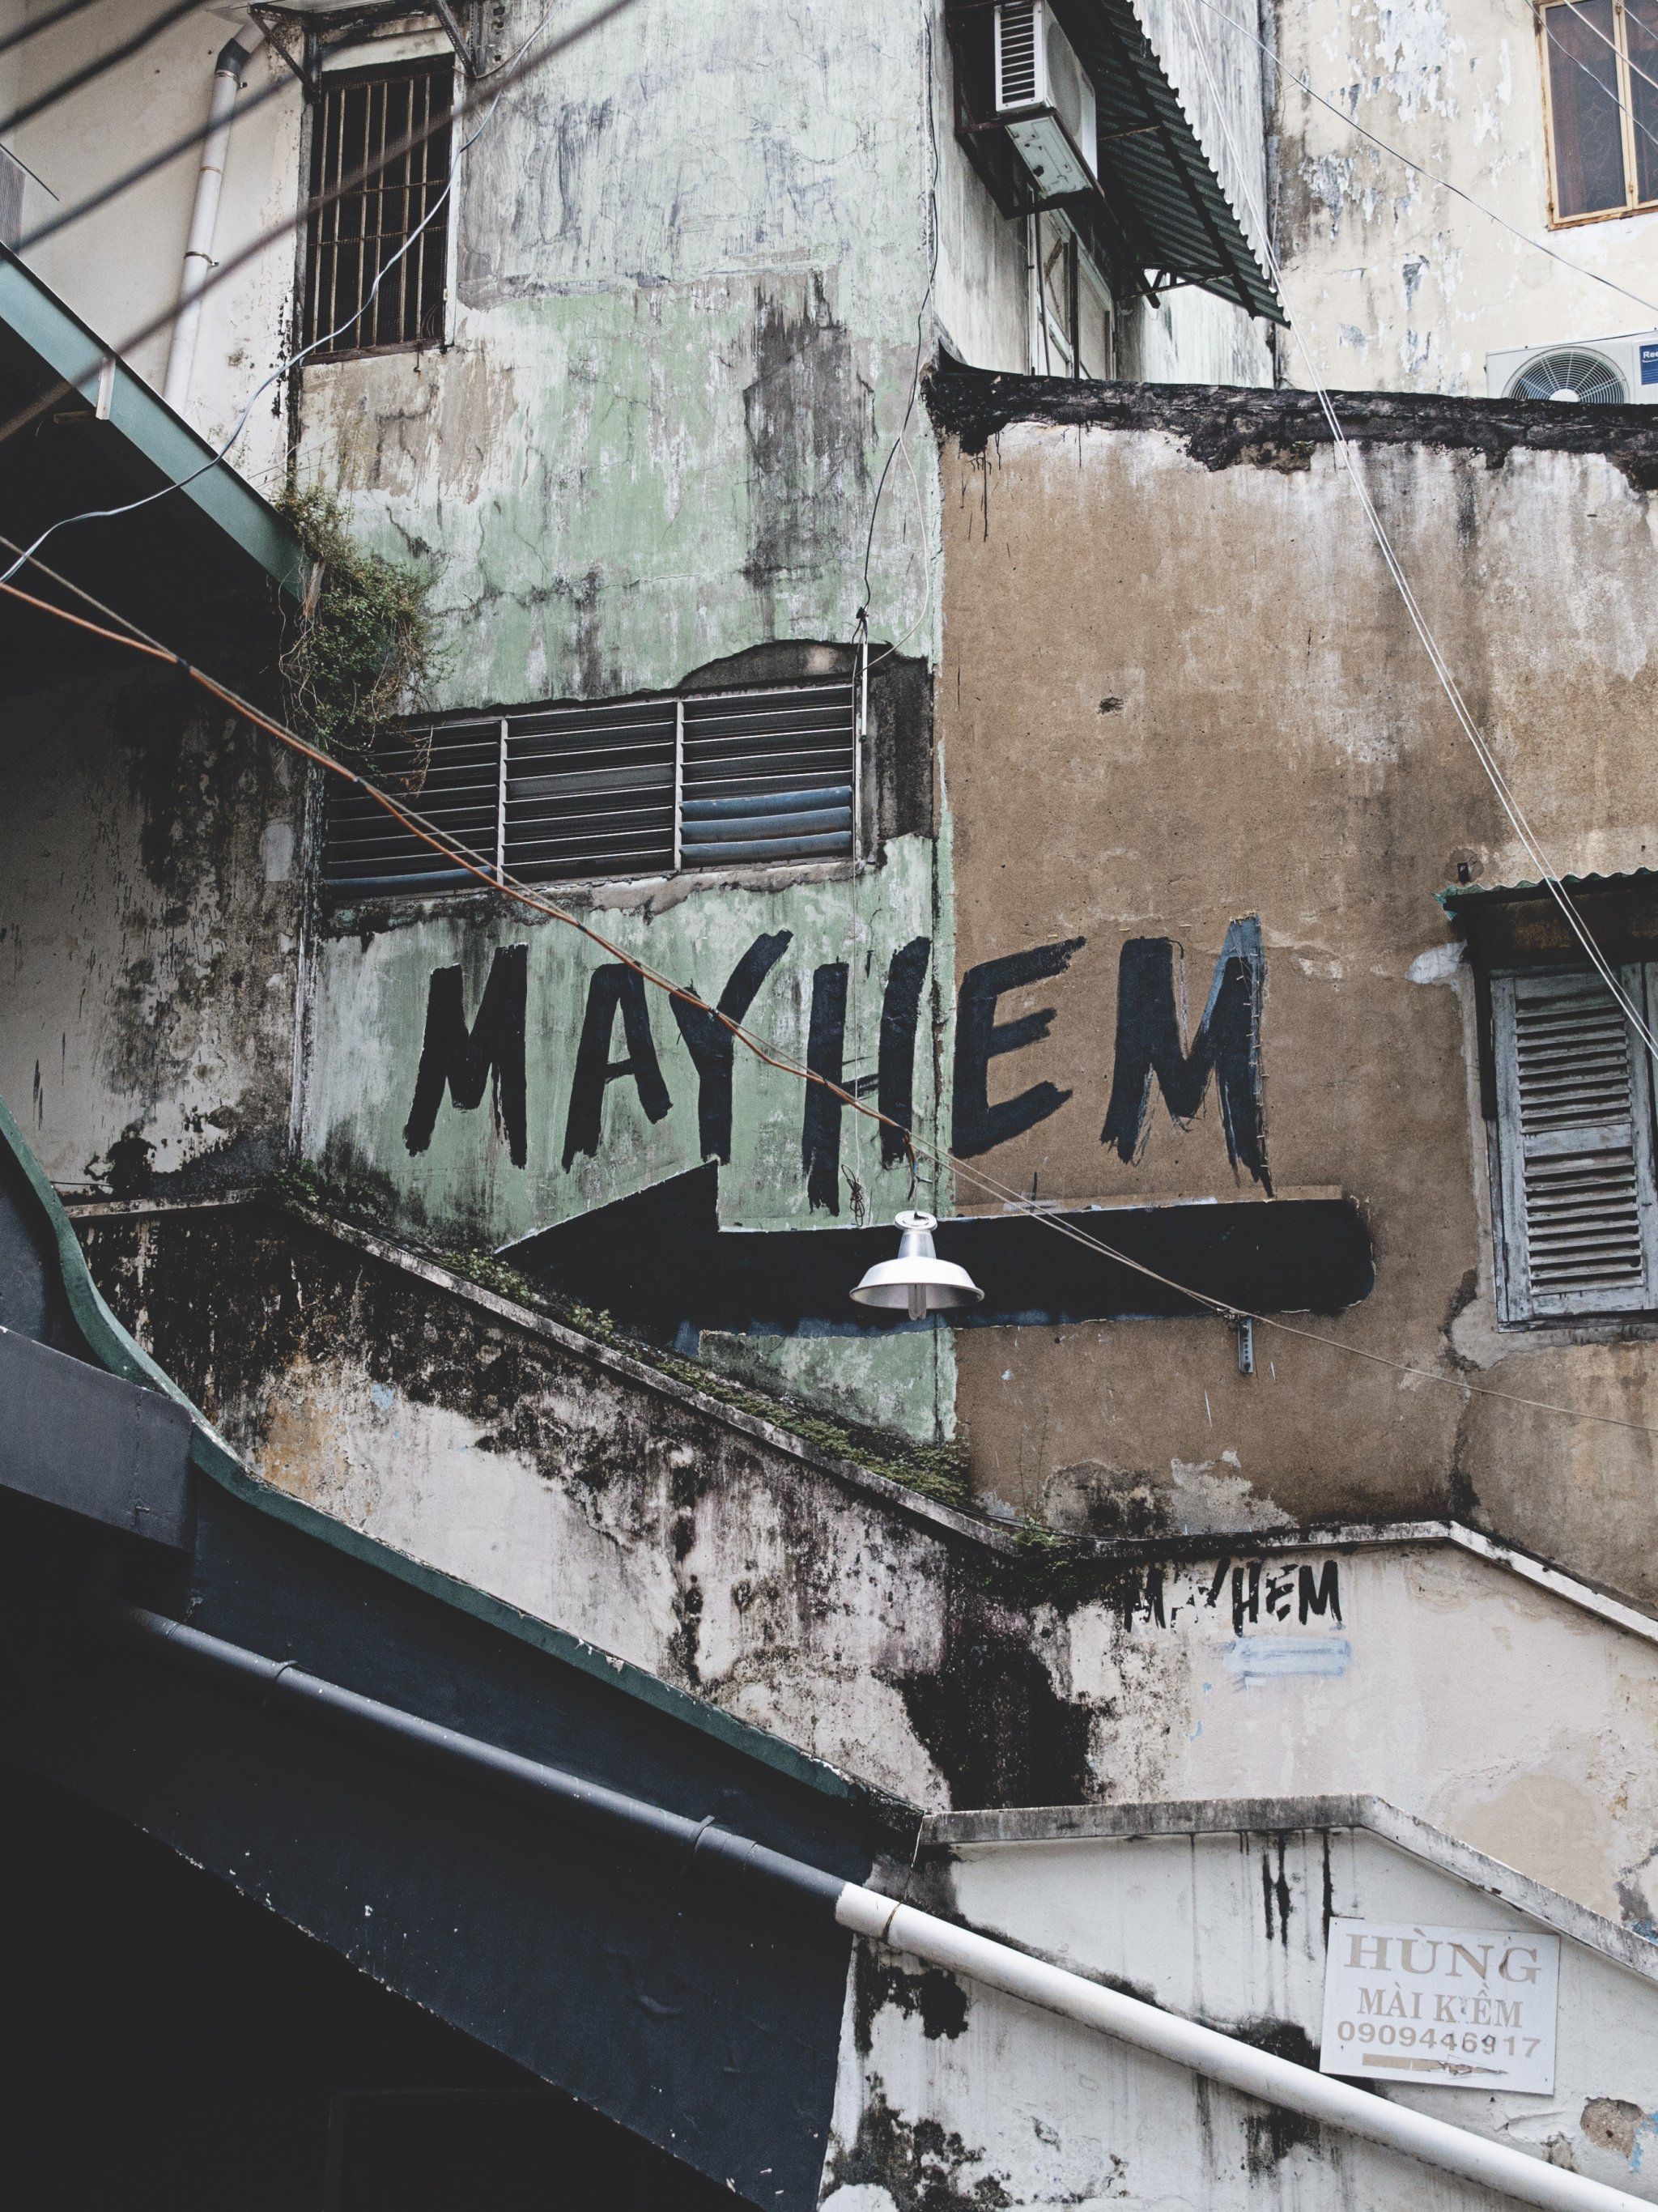 A wall with the word Mayhem written on it - Graffiti